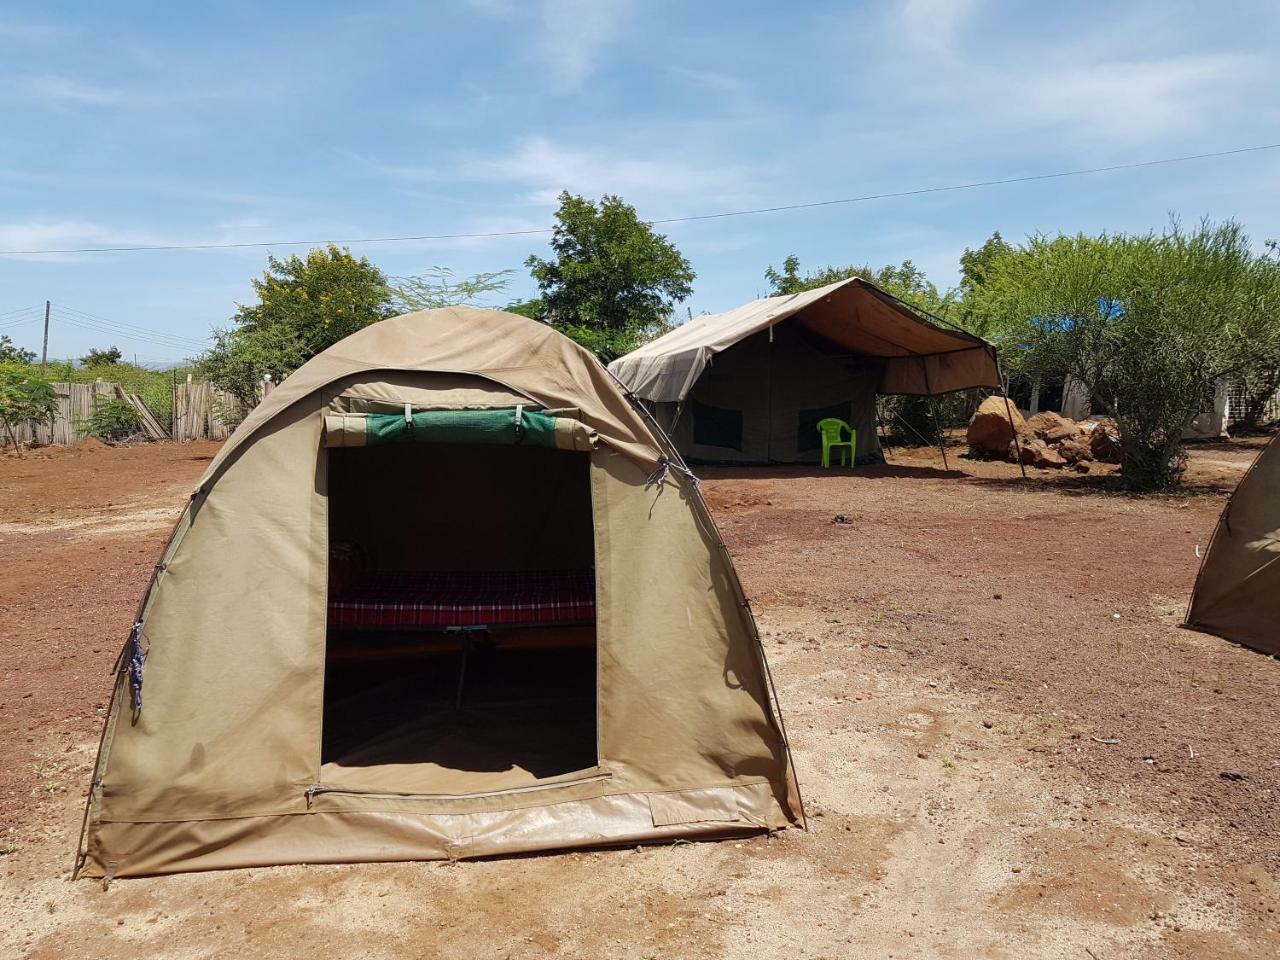 Hotel Kizumba Camp Site Manyara Exterior foto